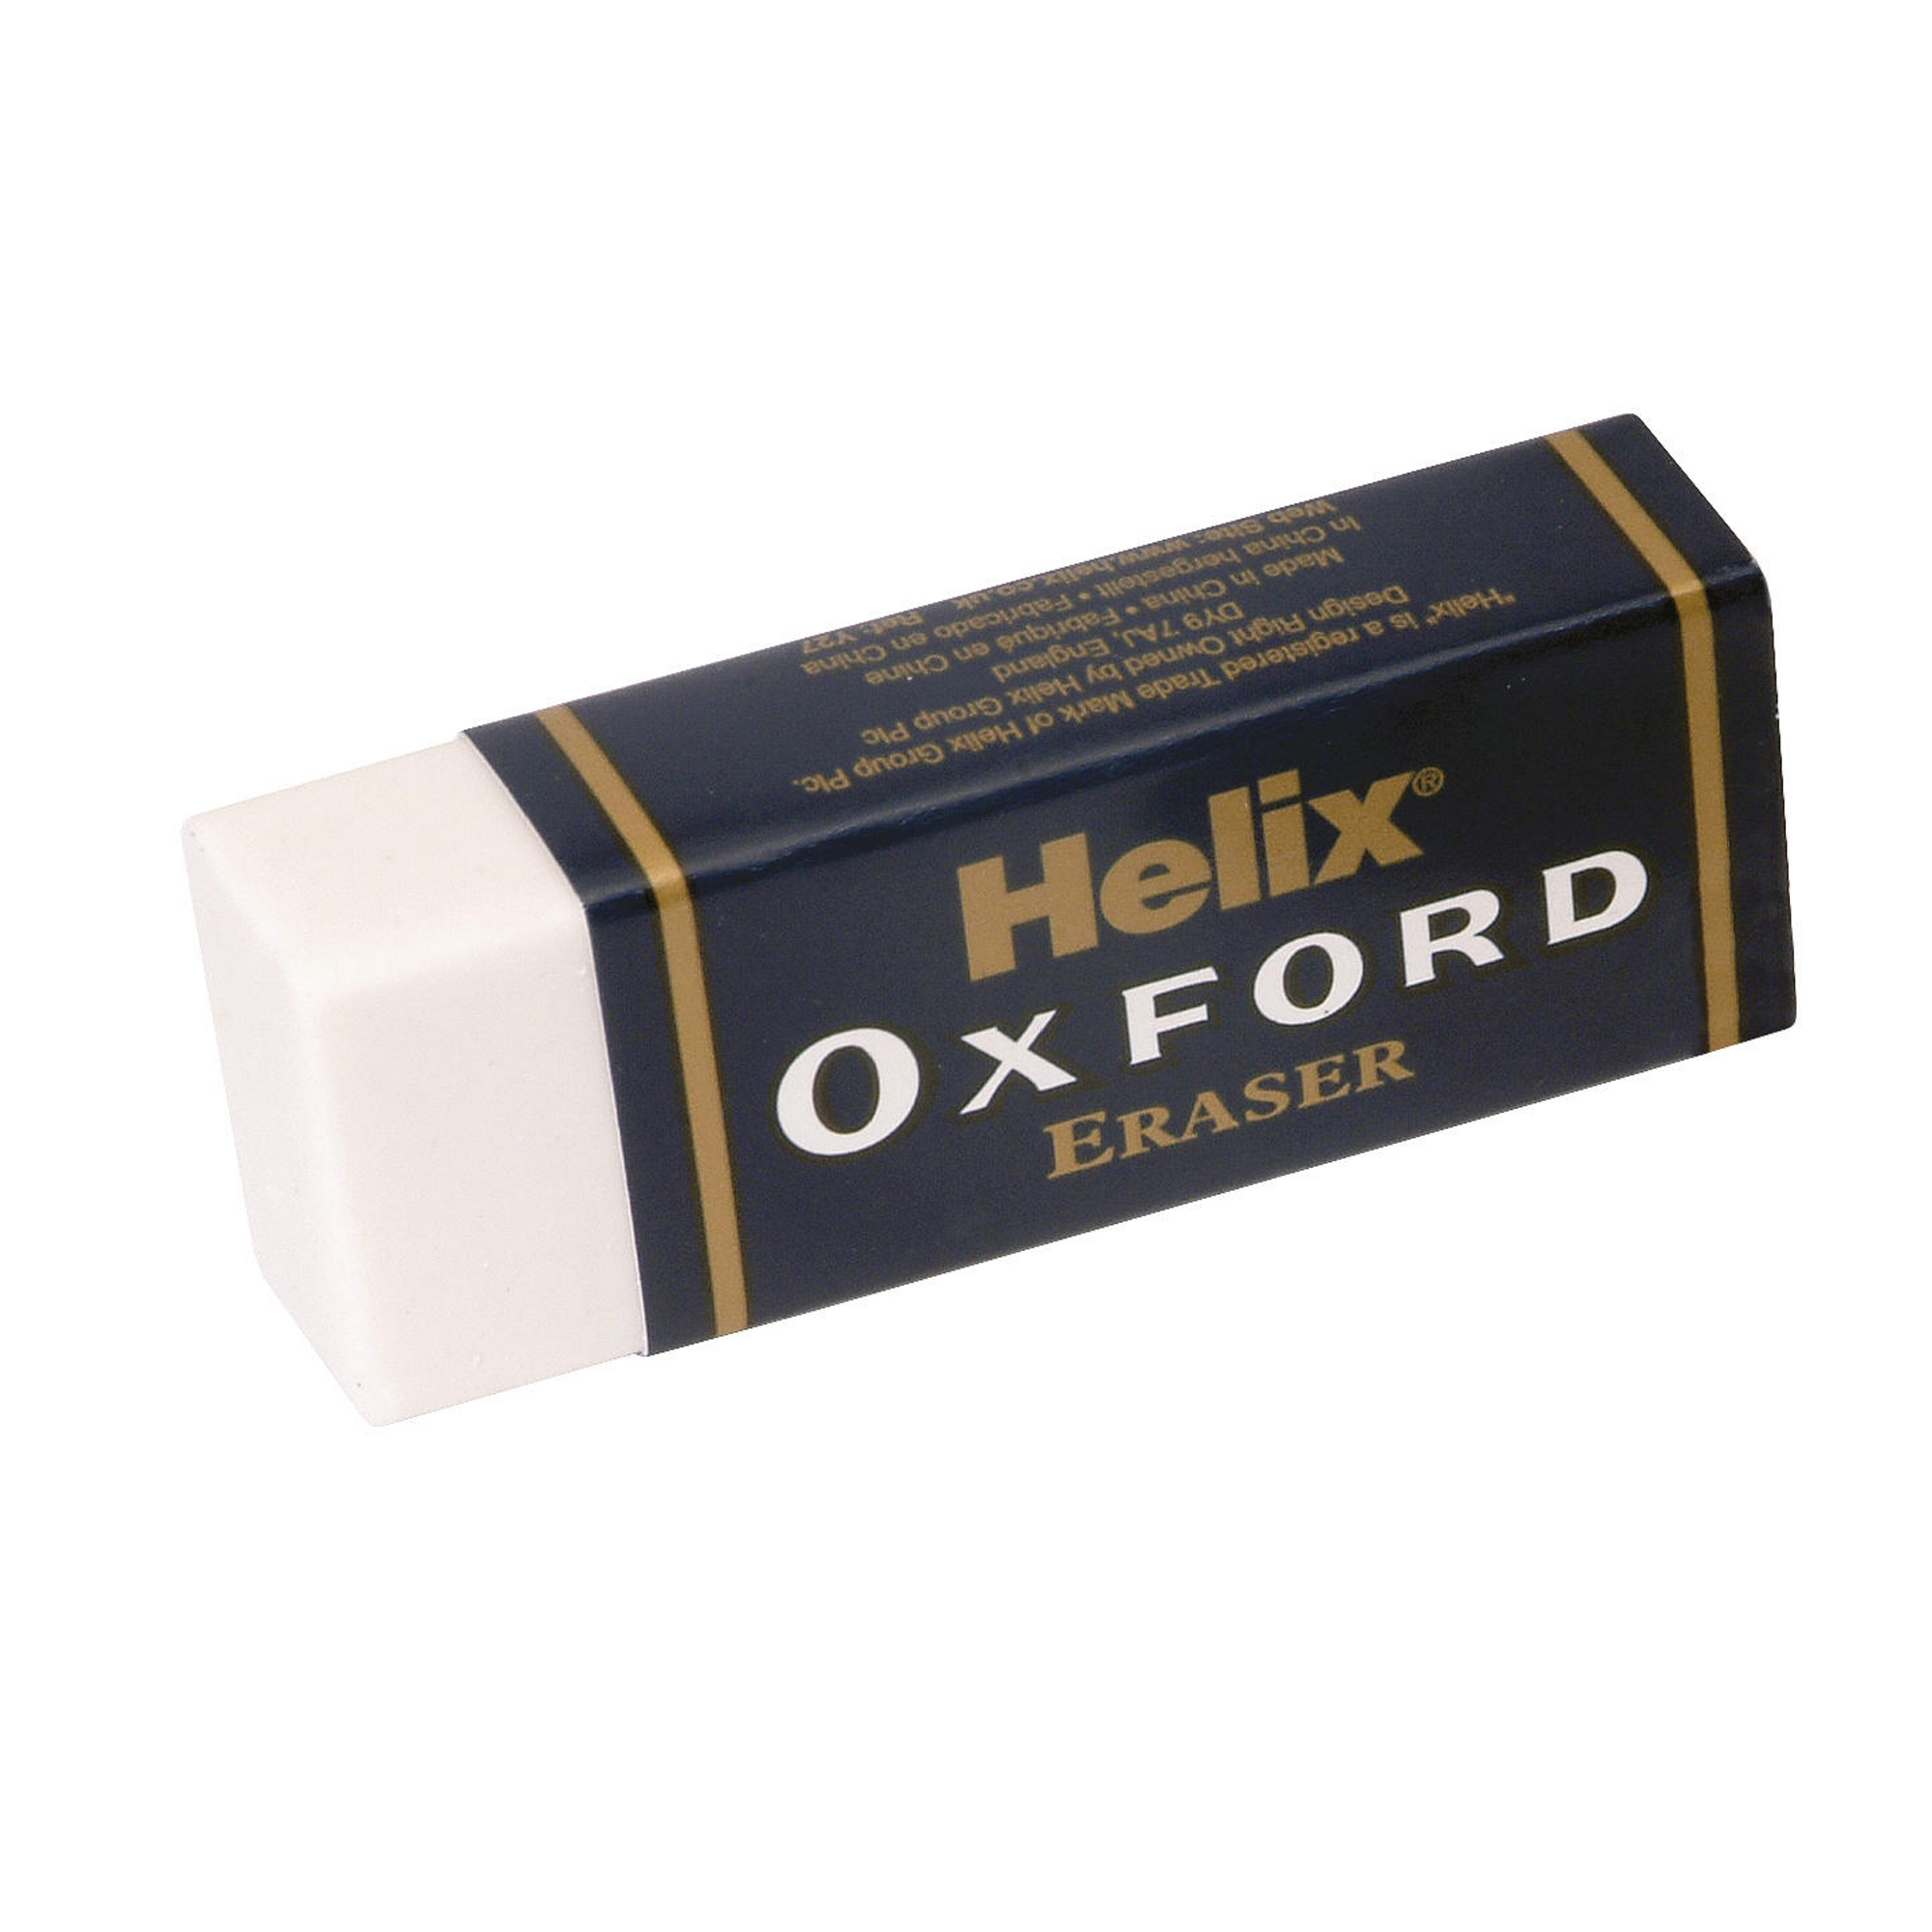 Oxford Large Sleeved Eraser Box Of 20